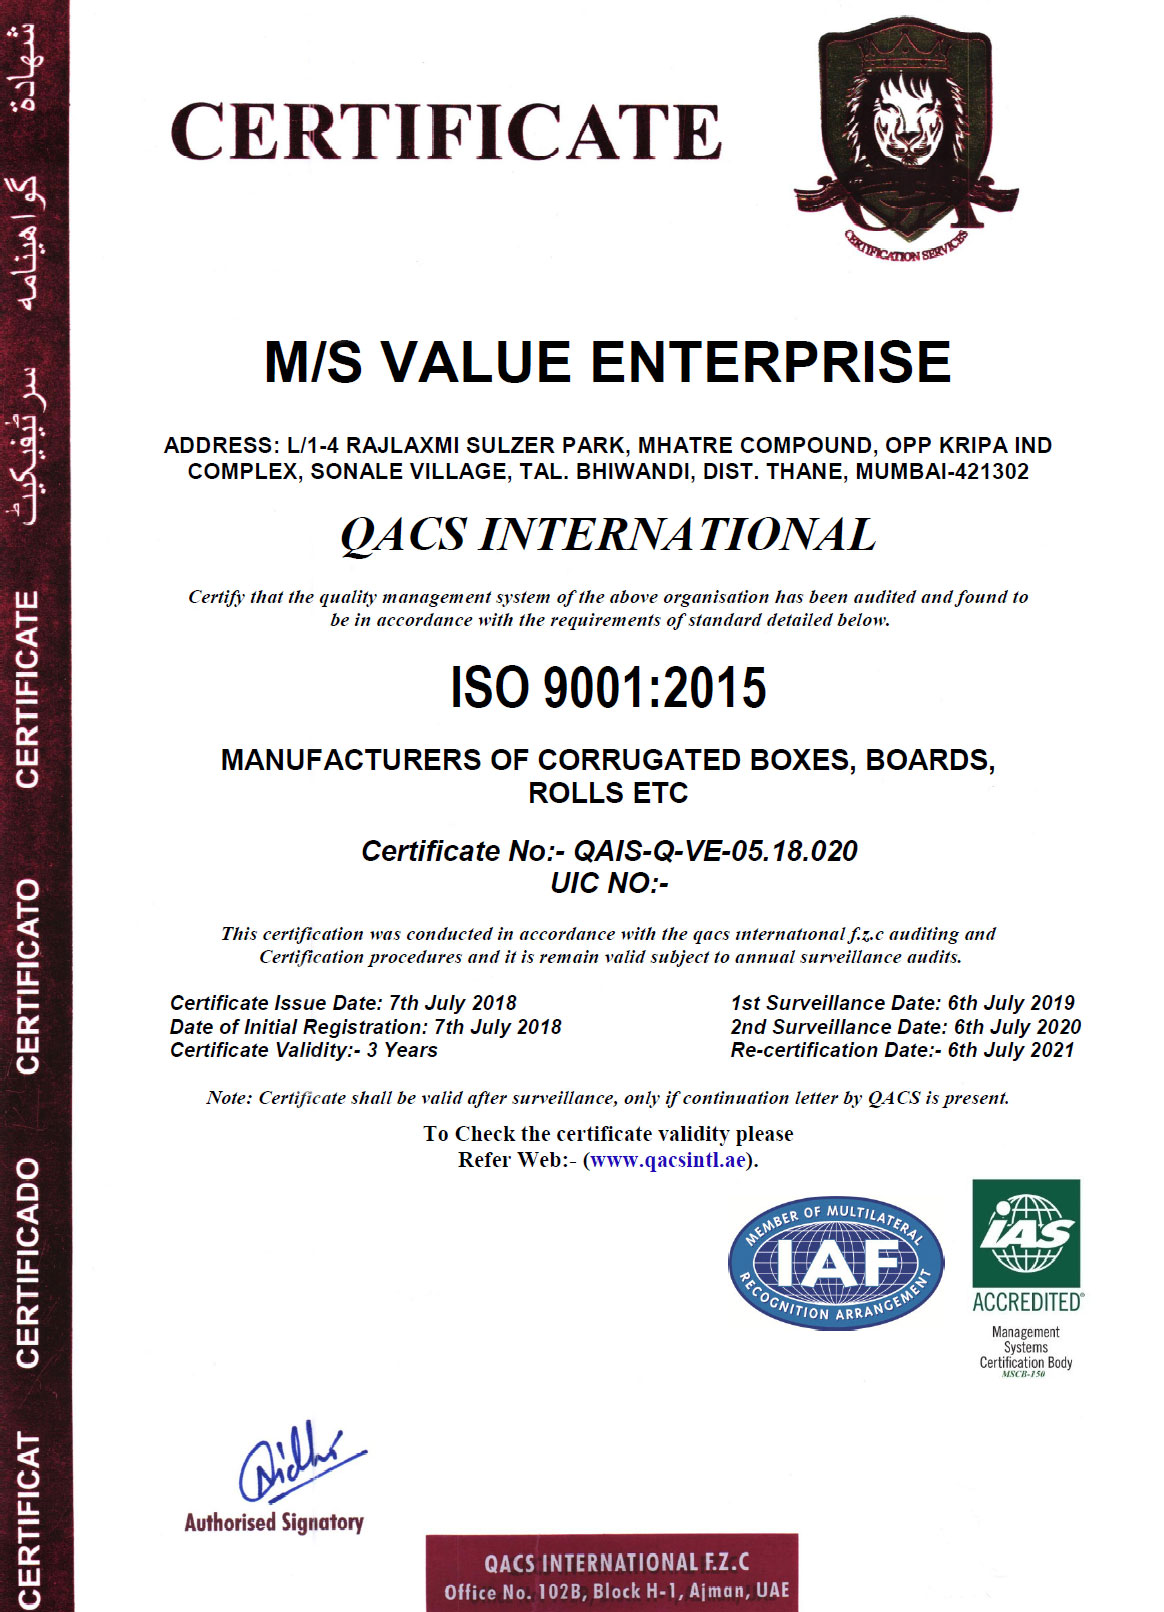 Value Enterprise - ISO 9001 : 2015 Certificate